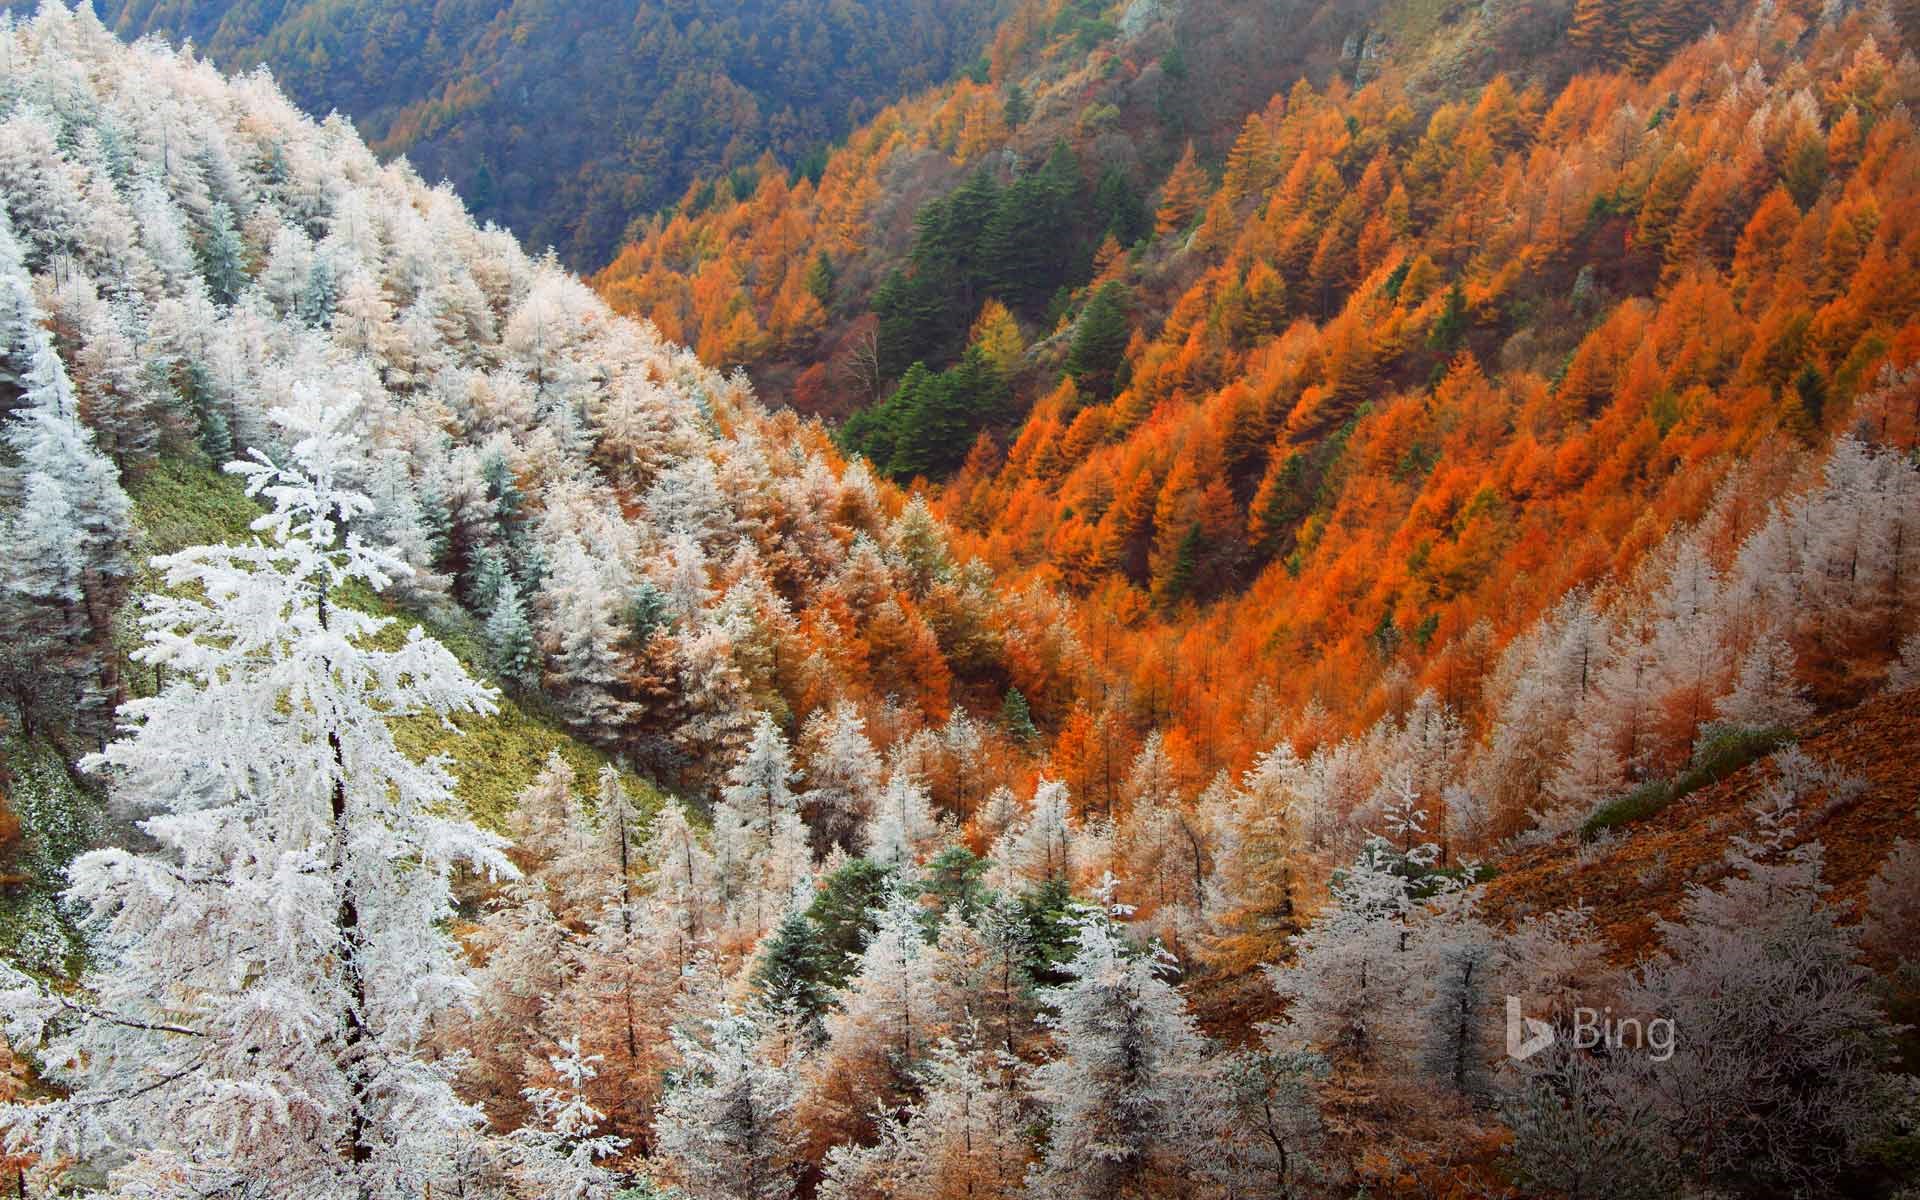 Larch forest near Matsumoto, Japan